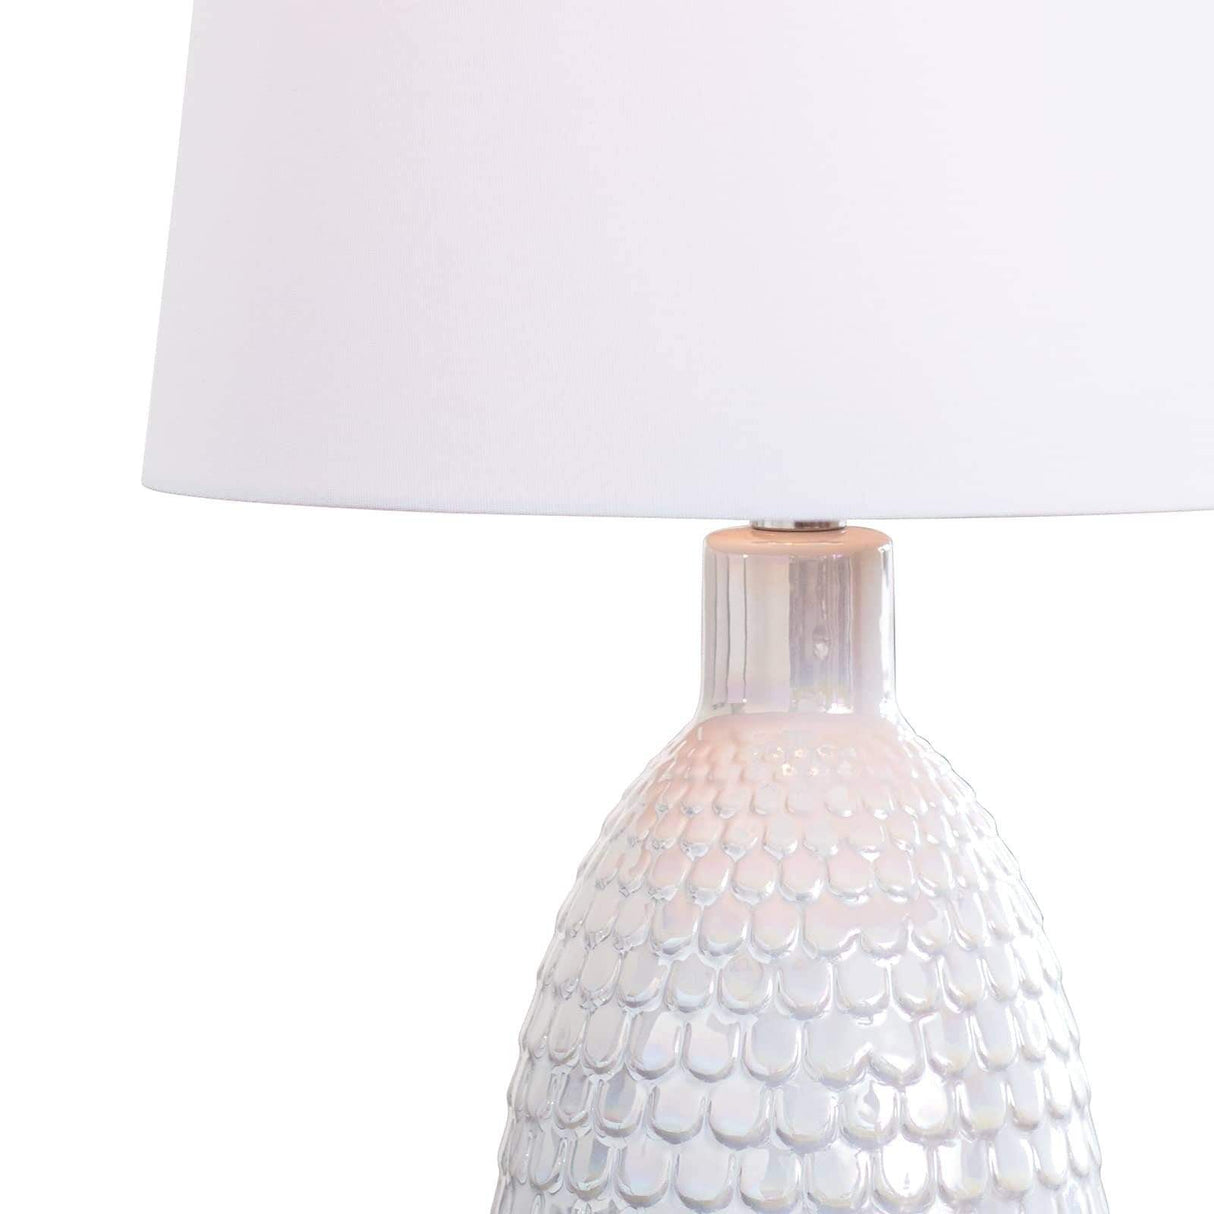 Regina Andrew Glimmer Ceramic Table Lamp Lighting regina-andrew-13-1494WT